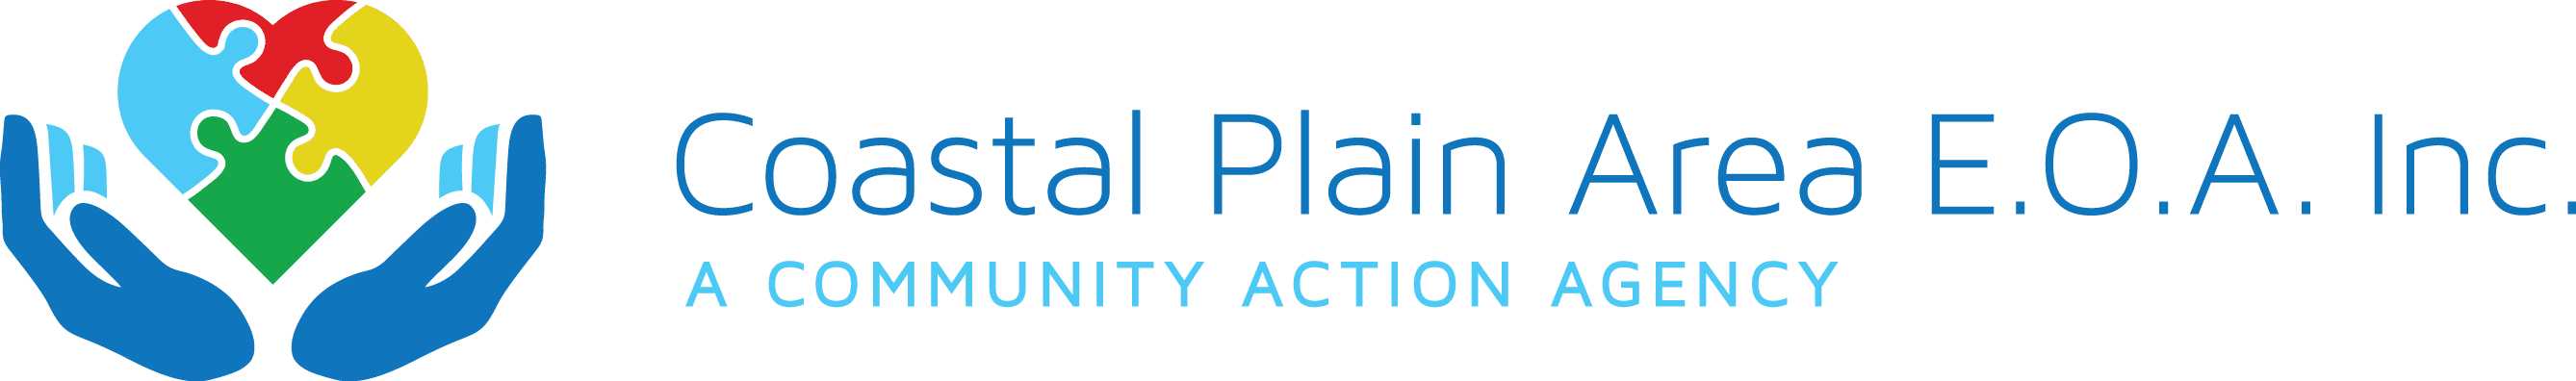 Coastal Plain Area Economic Opportunity Authority